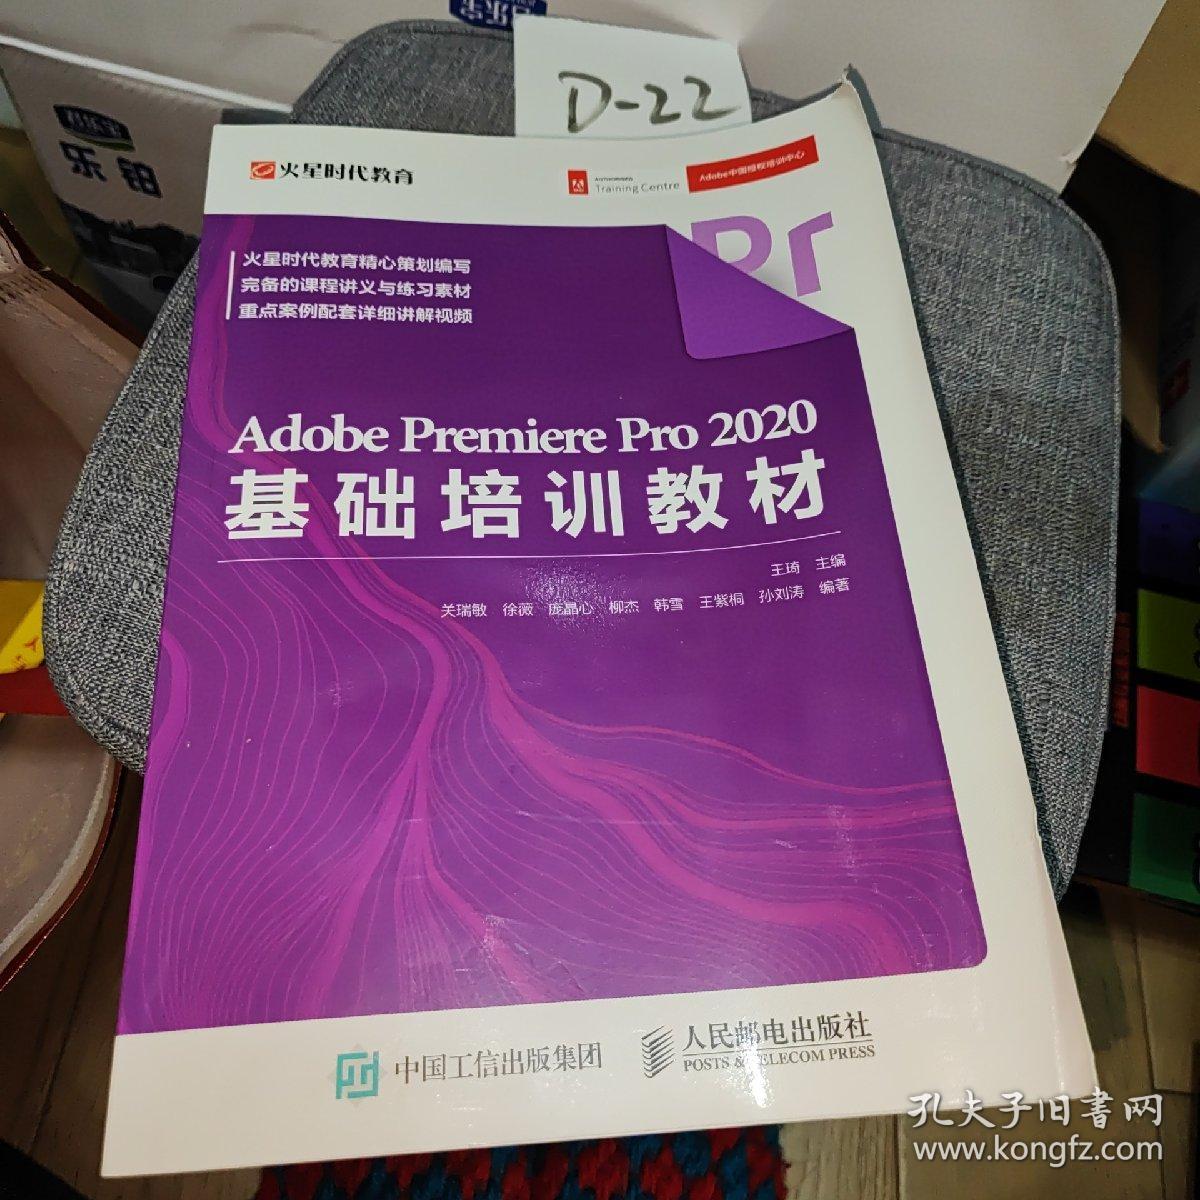 AdobePremierePro2020基础培训教材